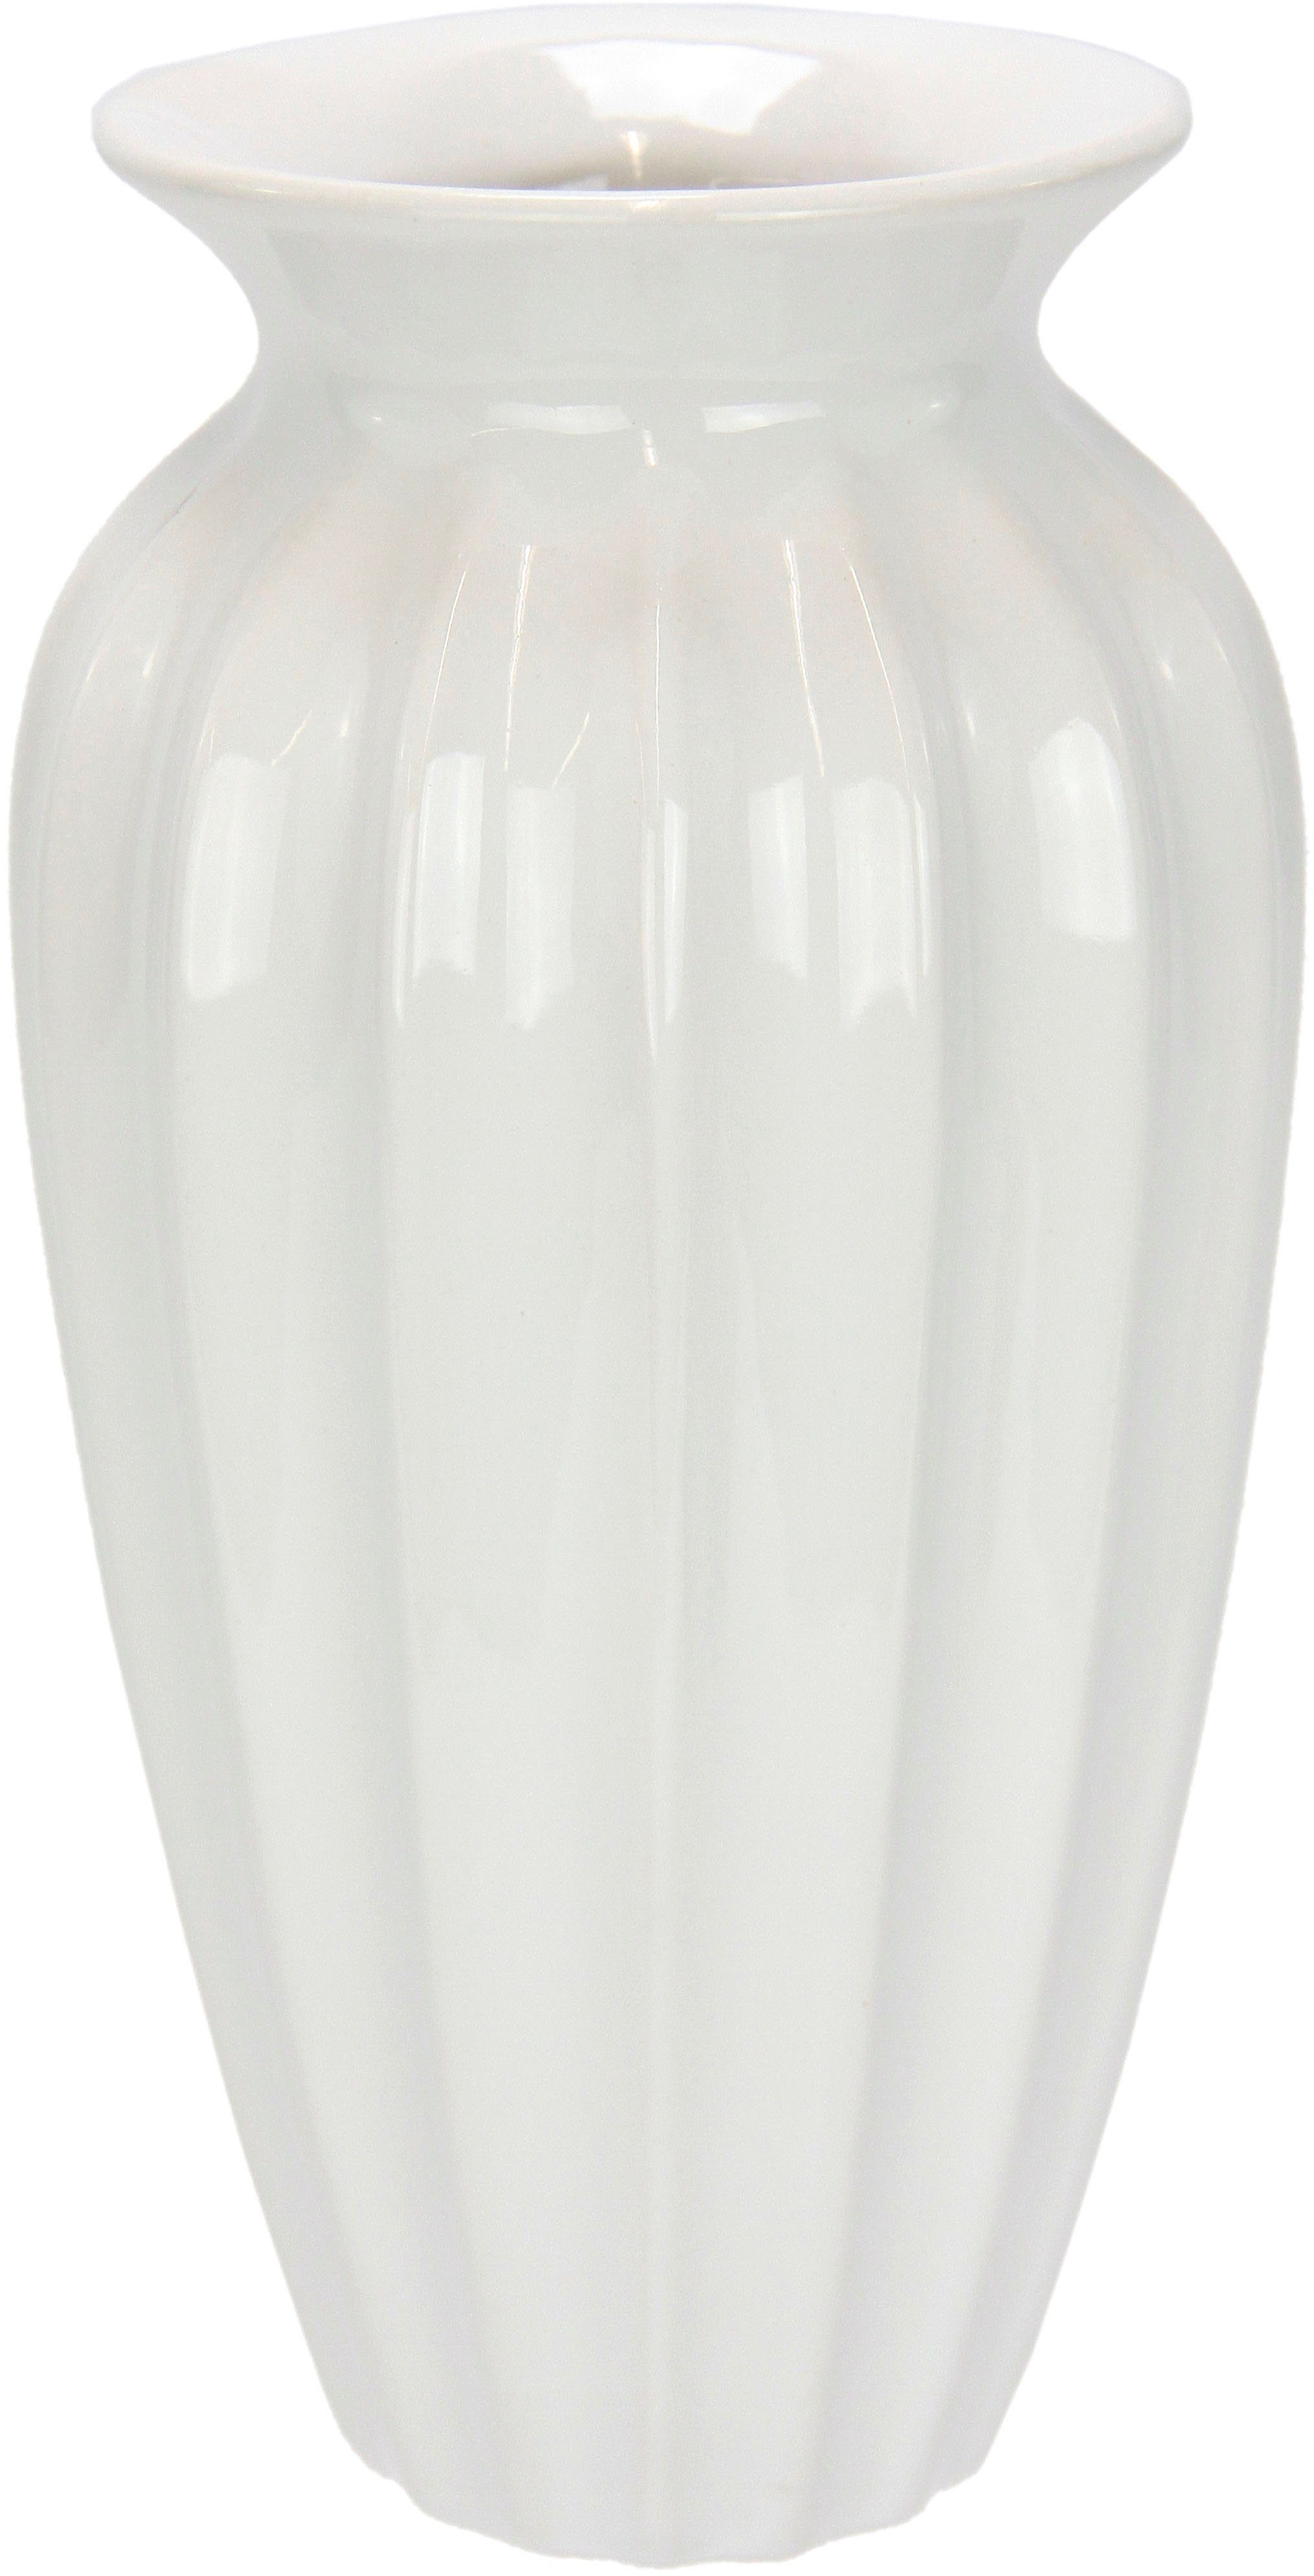 groß Keramik, Dekovase Vase, rund Aus Keramik I.GE.A.